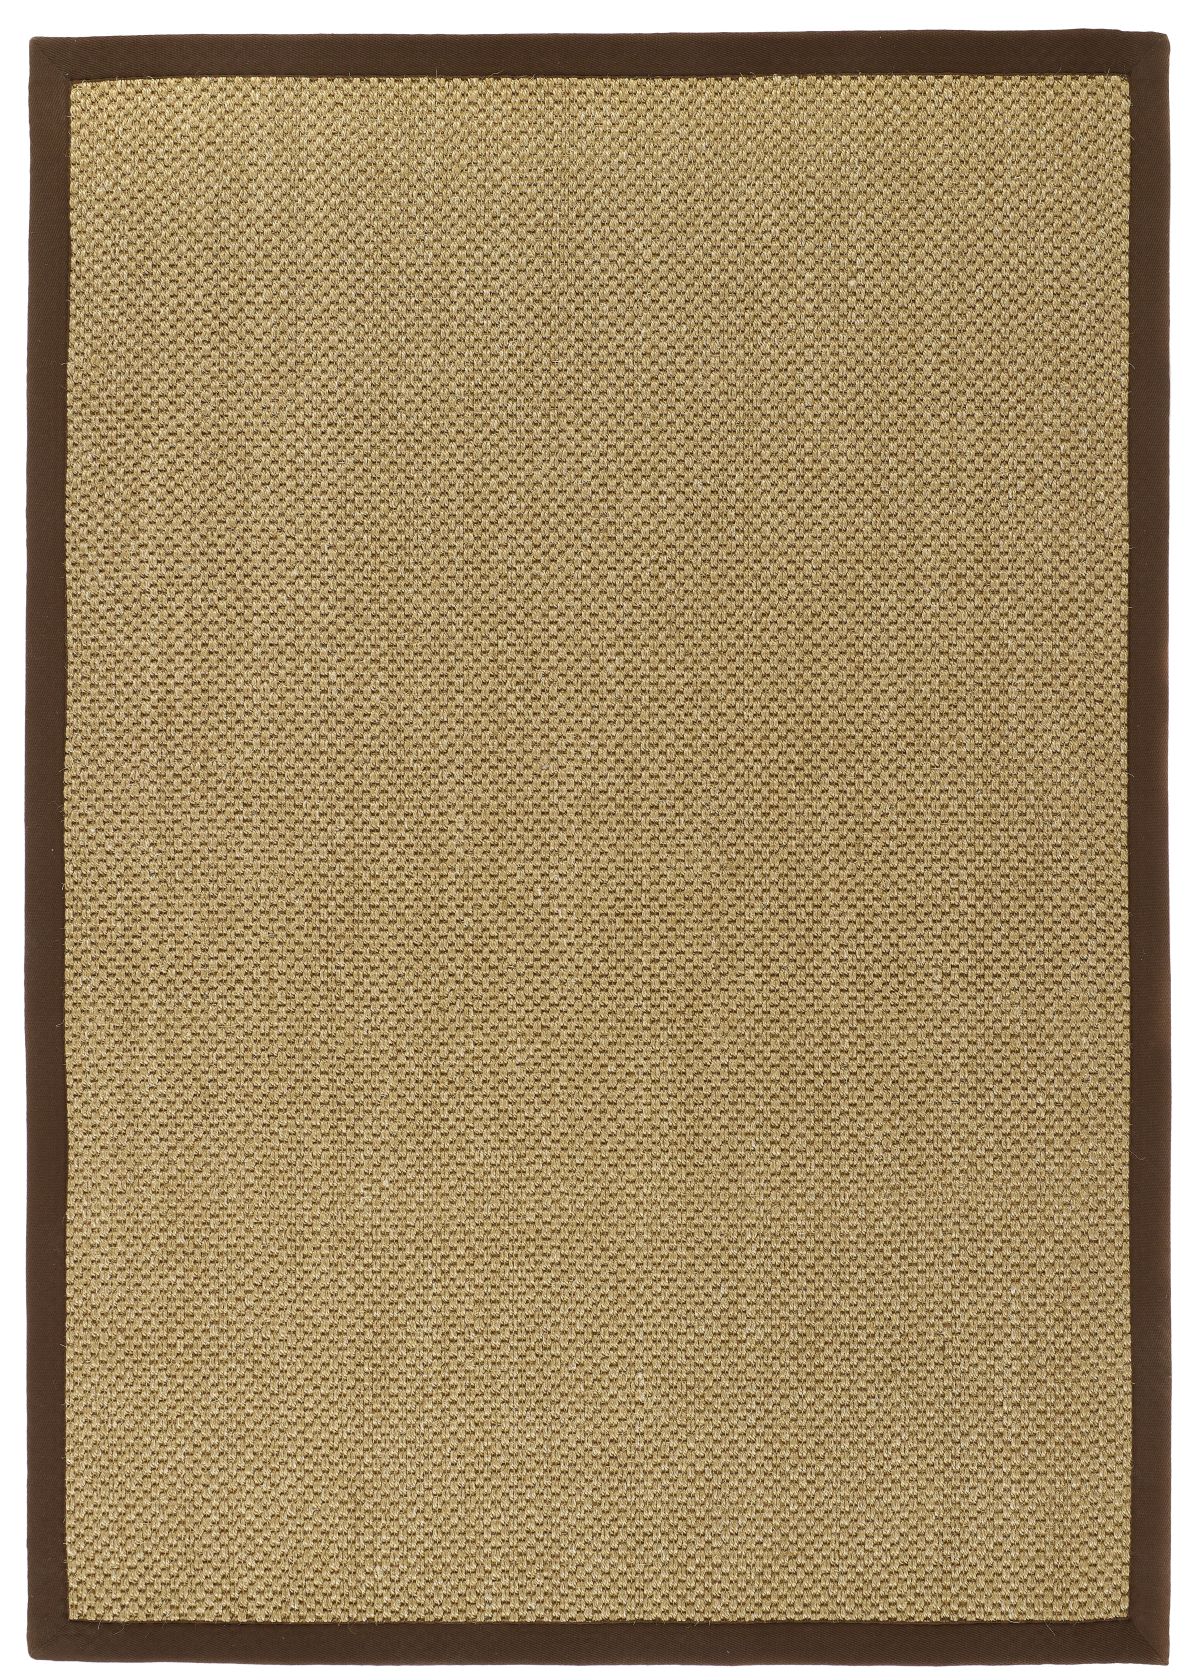 origin-rug-sisal-warm-natural-with-dark-brown-border